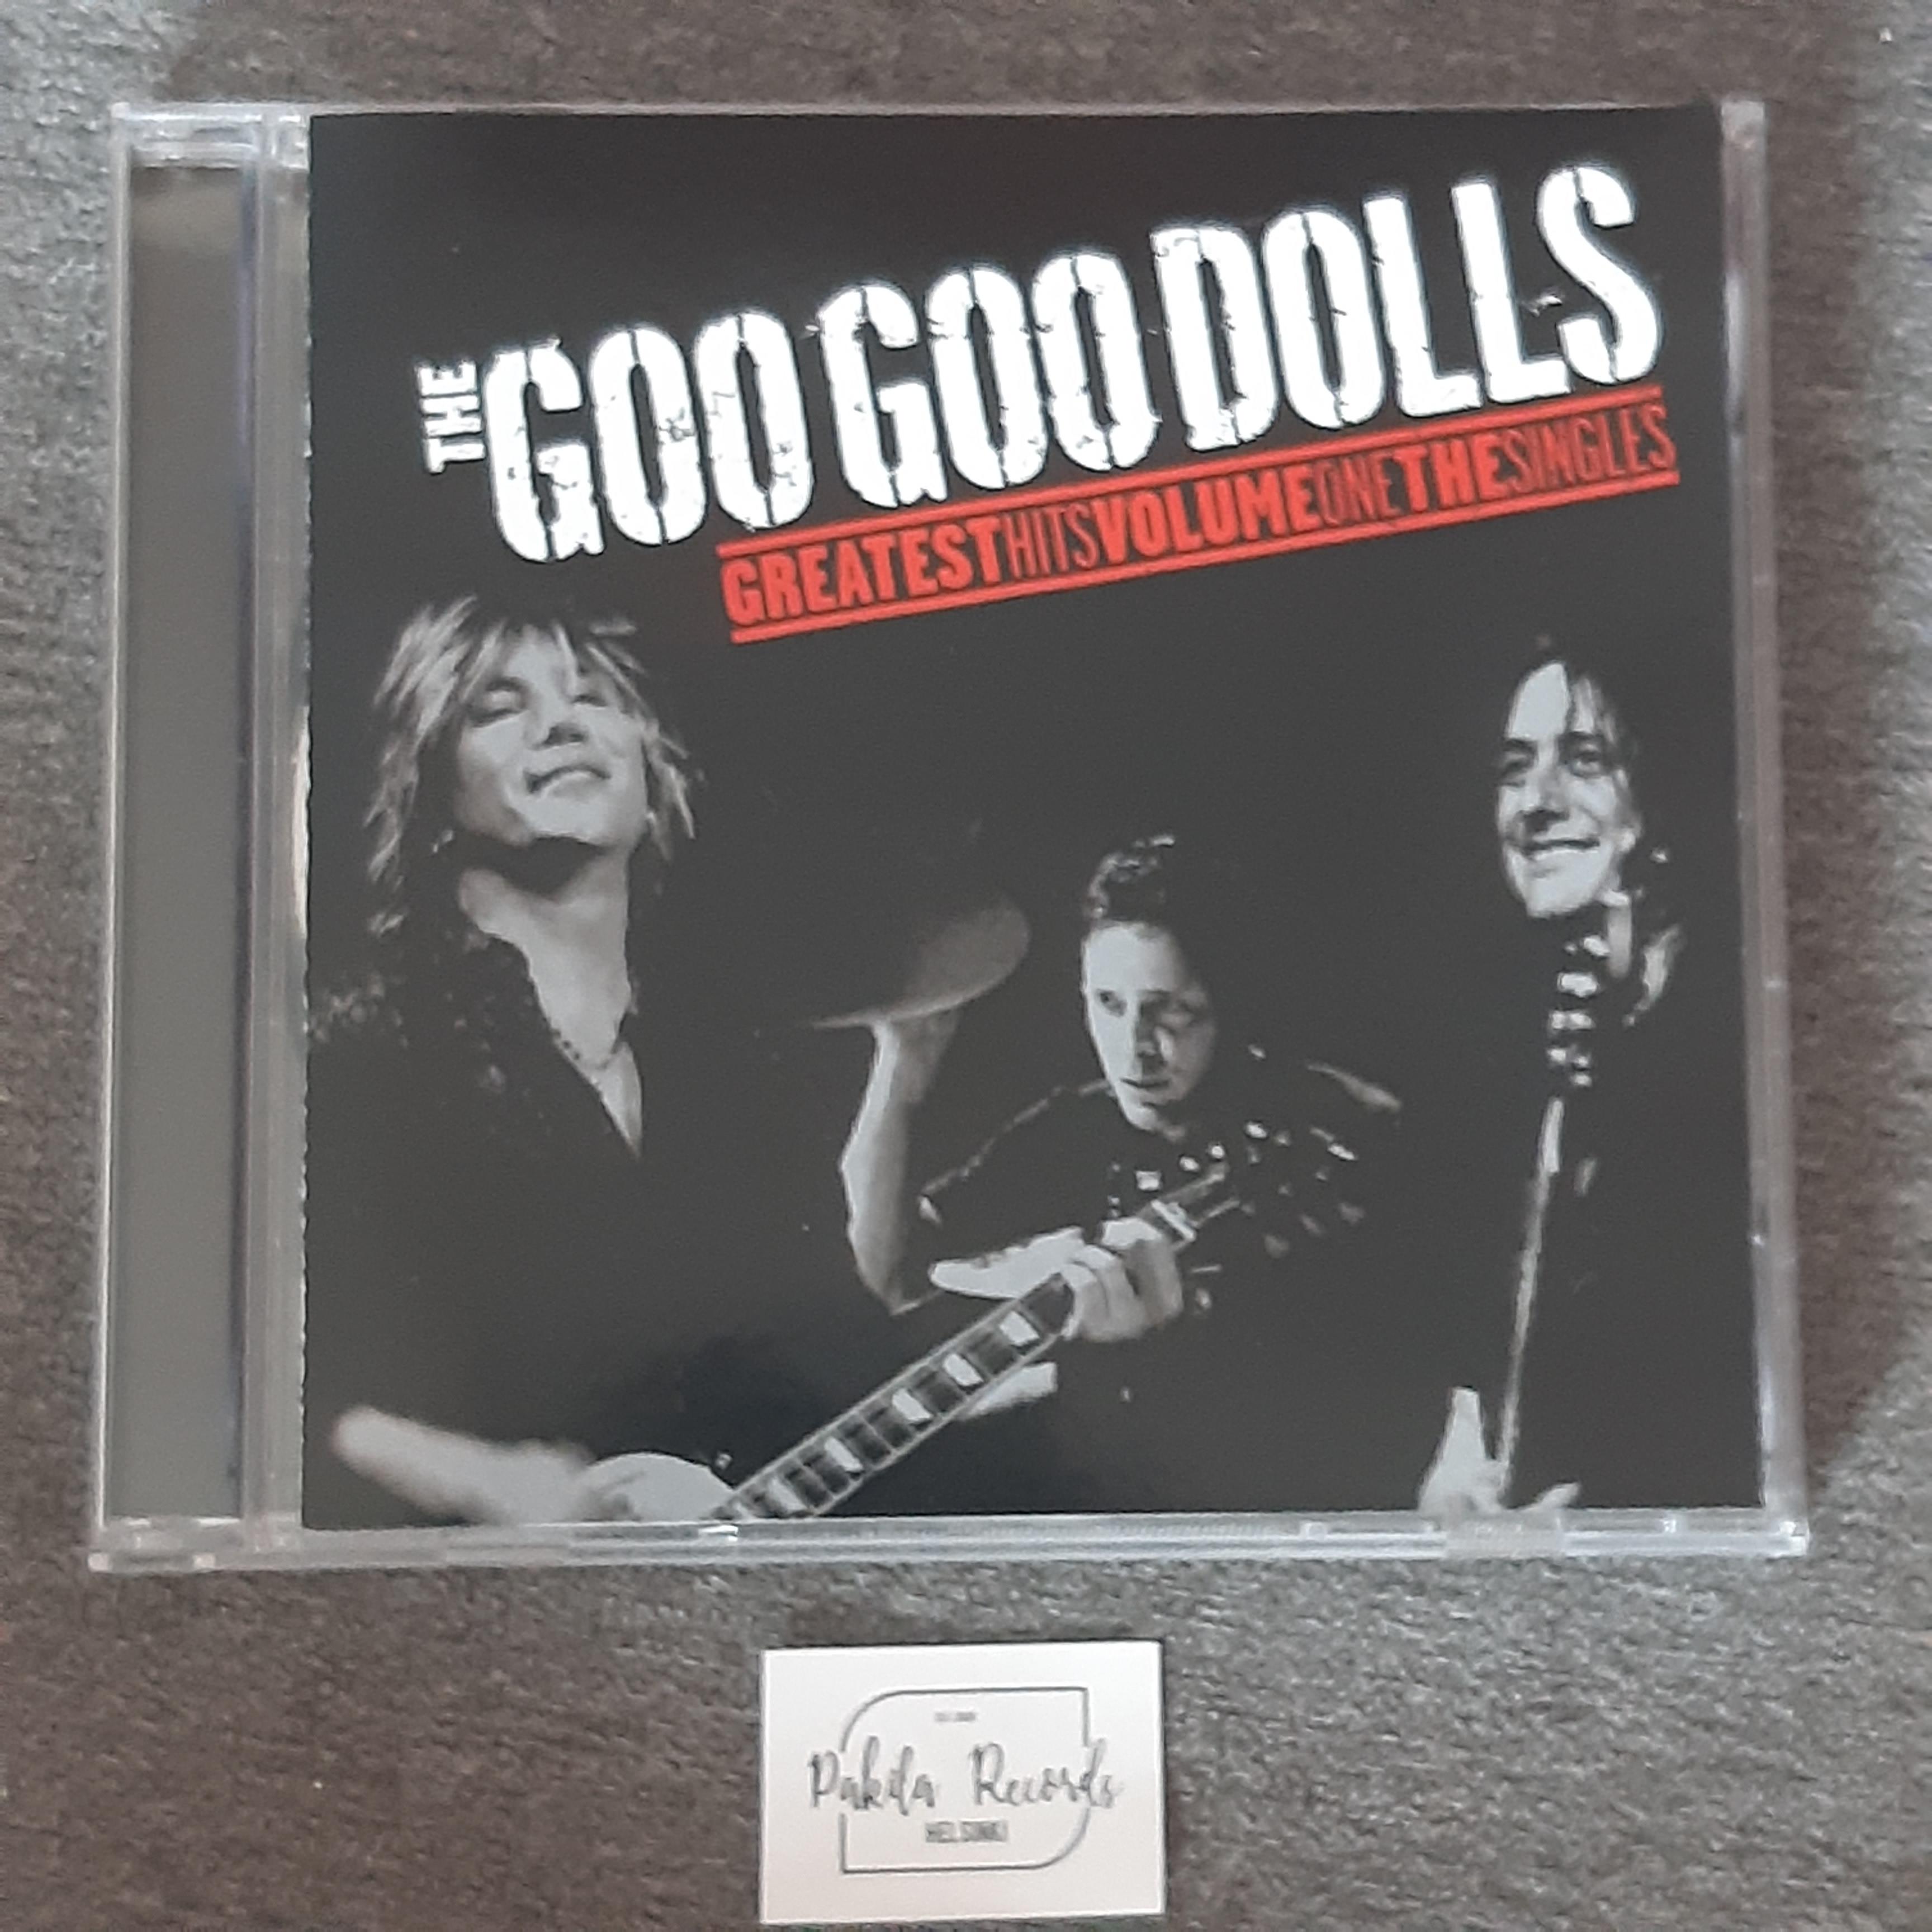 The Goo Goo Dolls - Greatest Hits Volume One The Singles - CD (käytetty)